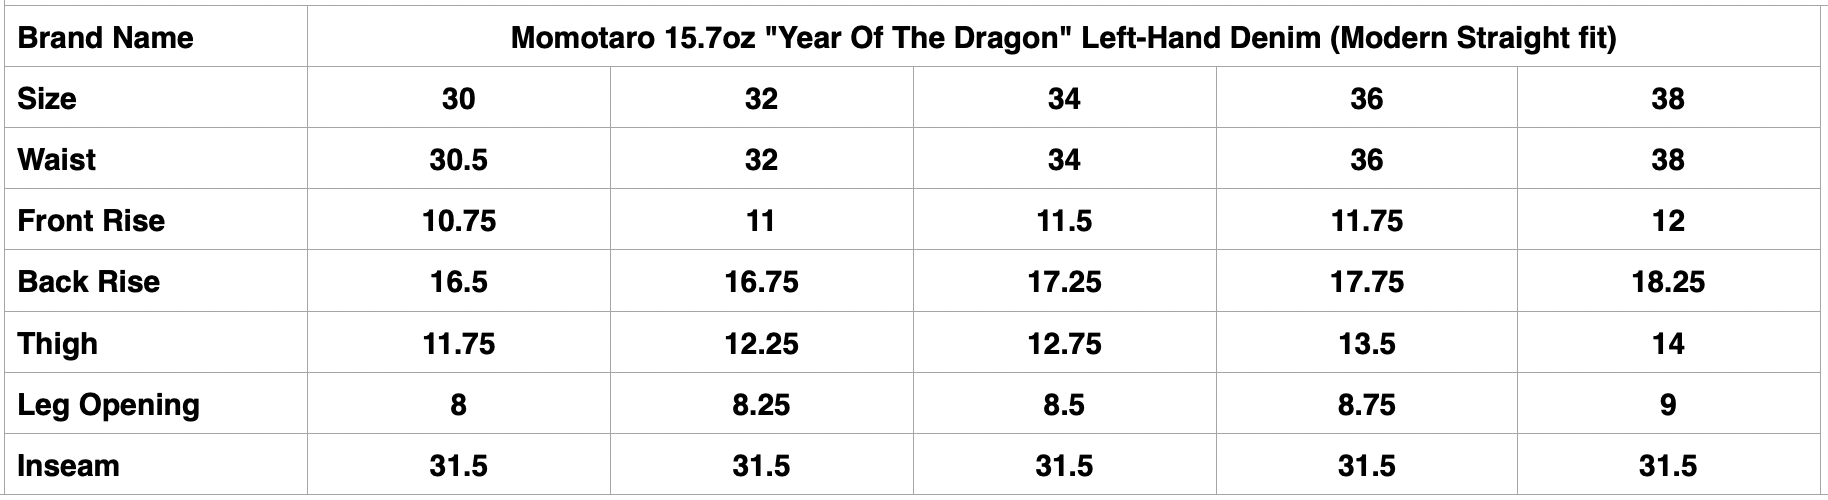 Momotaro 15.7oz "Year Of The Dragon" Left-Hand Denim (Modern Straight fit)